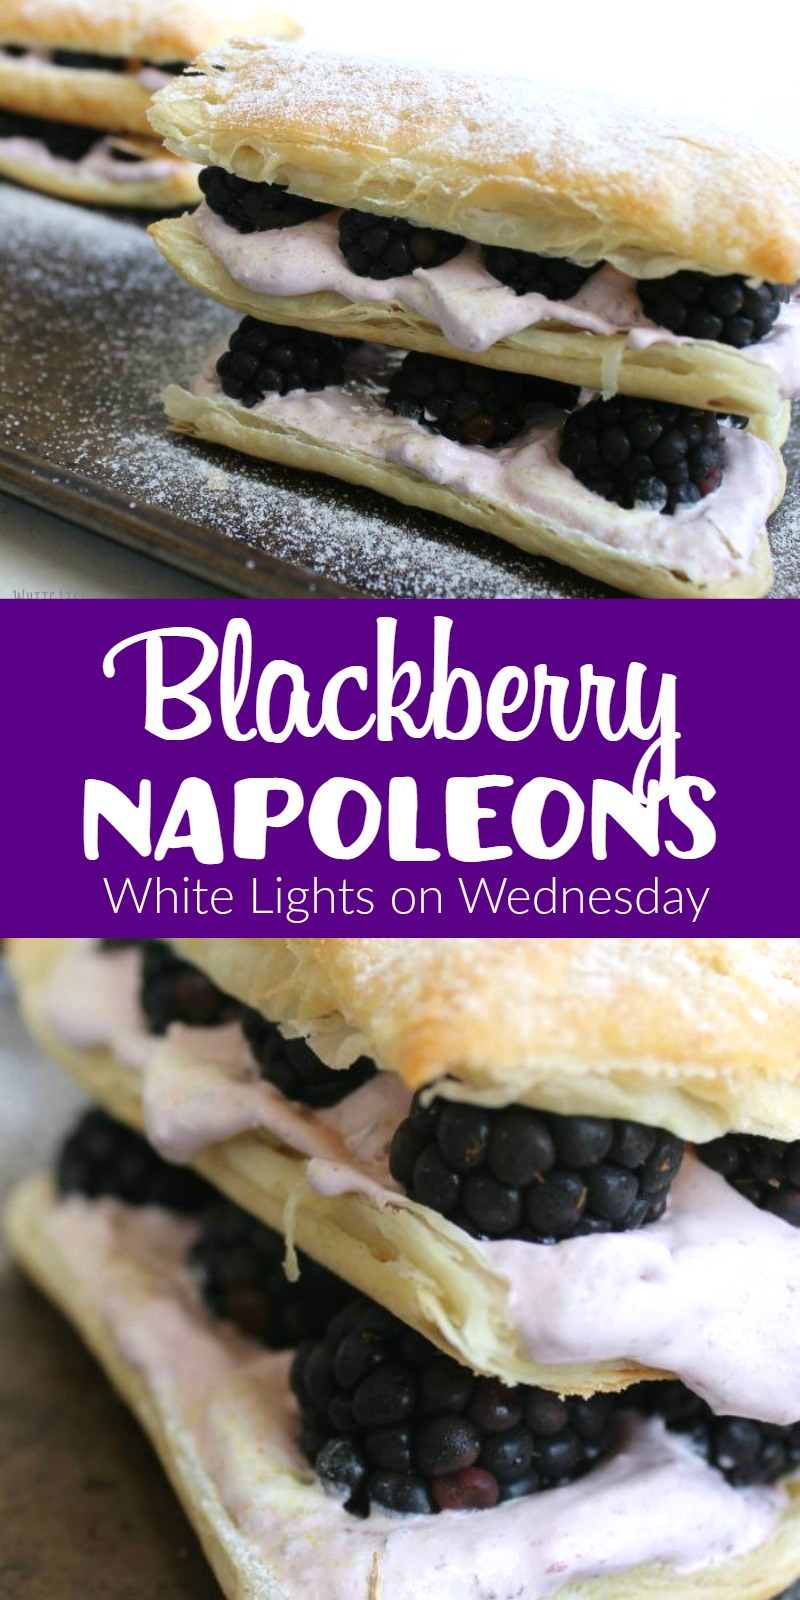 Blackberry Napoleons | White Lights on Wednesday